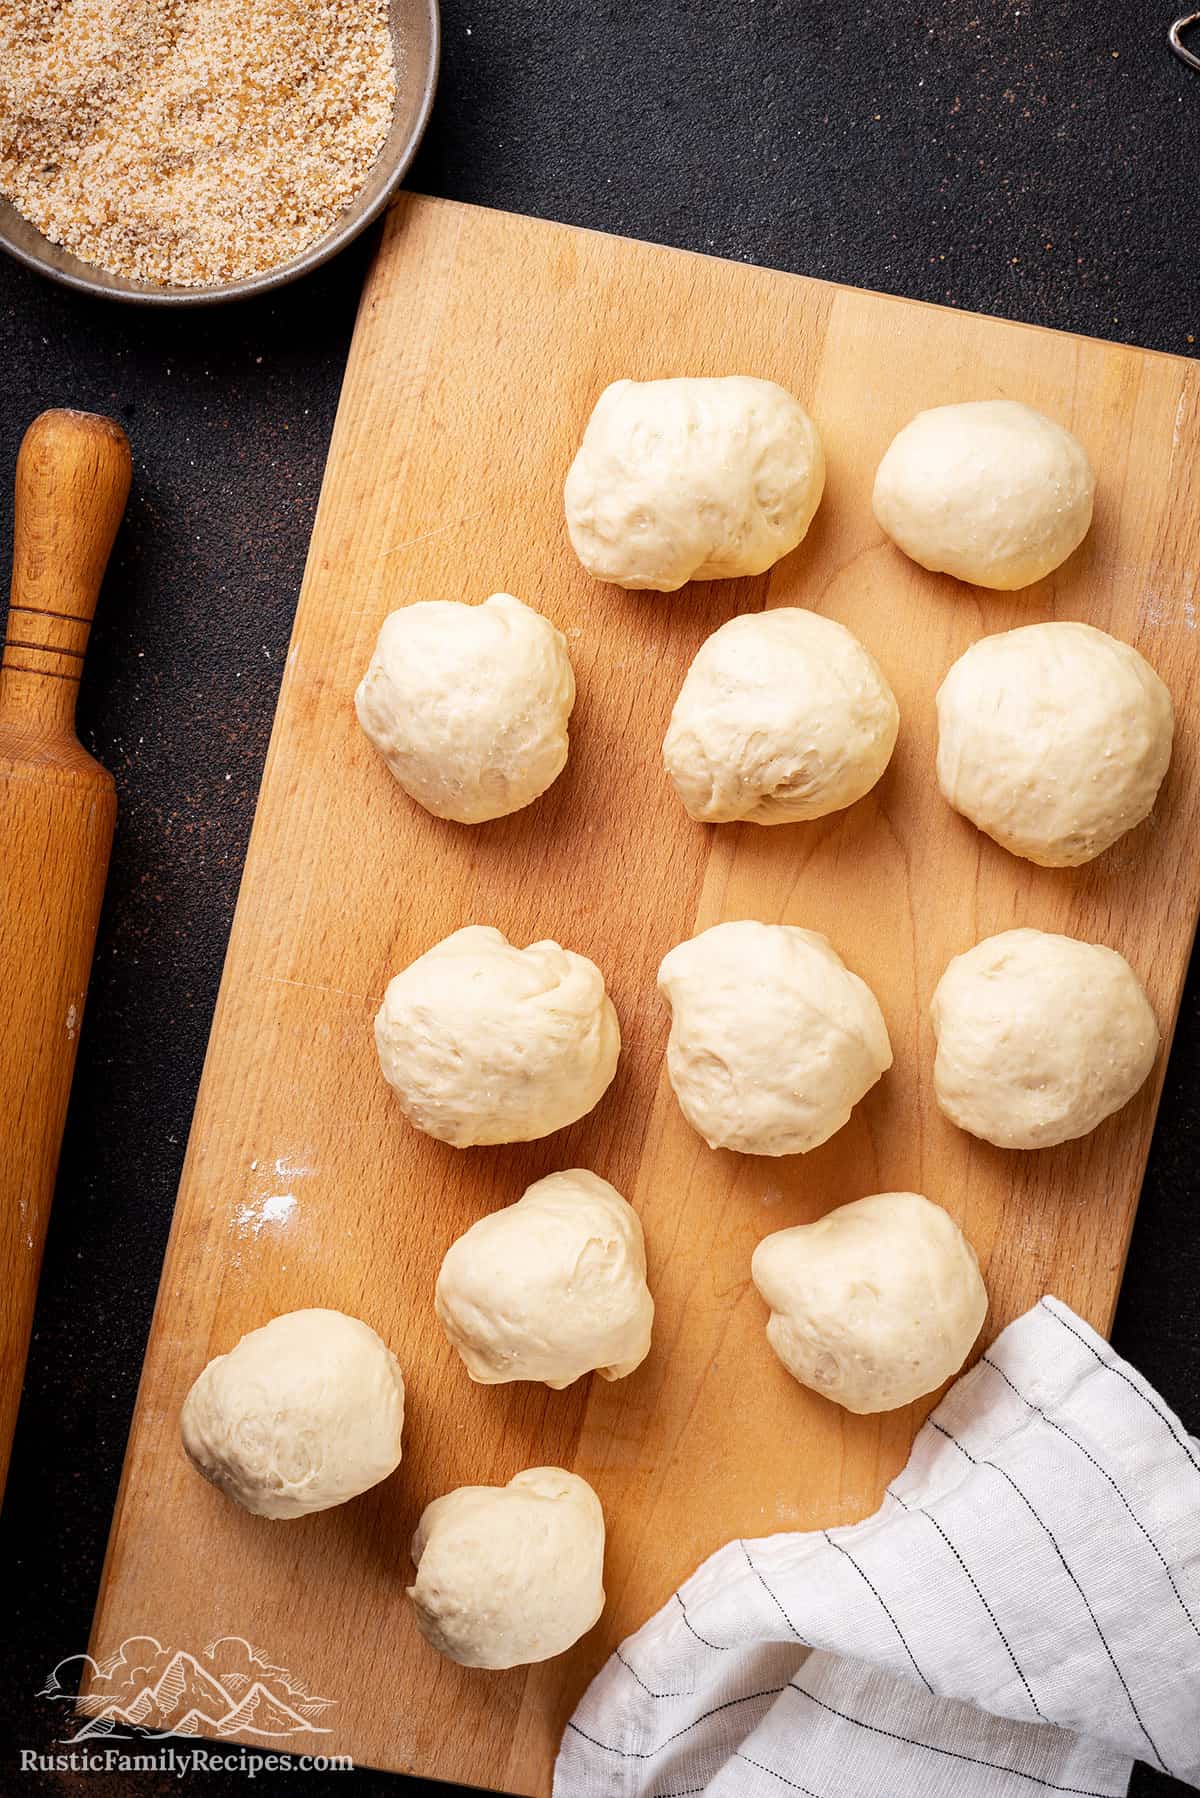 Balls of dough rising on a wood cutting board